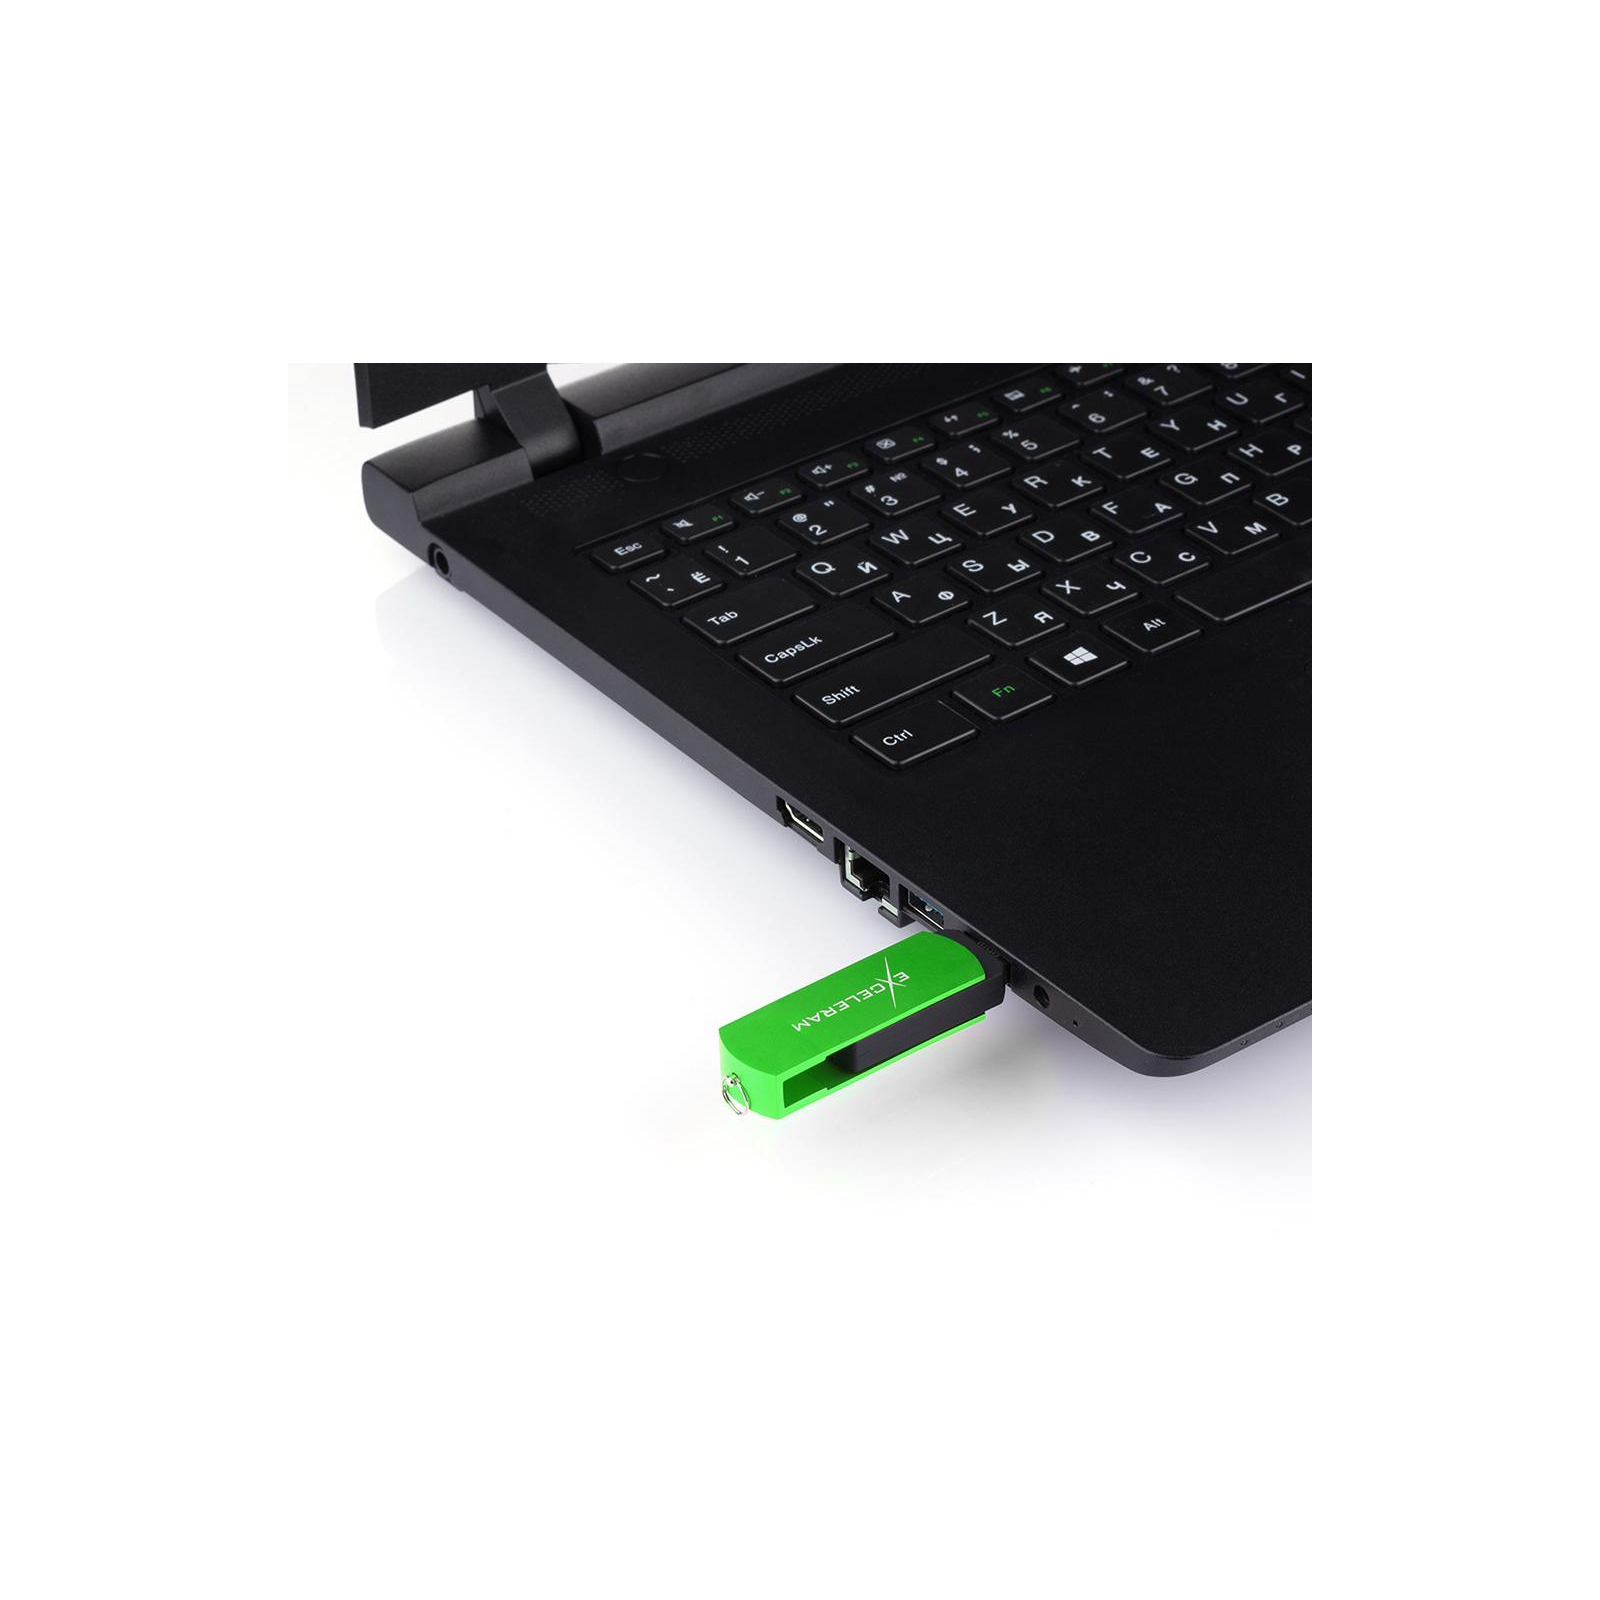 USB флеш накопитель eXceleram 32GB P2 Series Green/Black USB 2.0 (EXP2U2GRB32) изображение 7